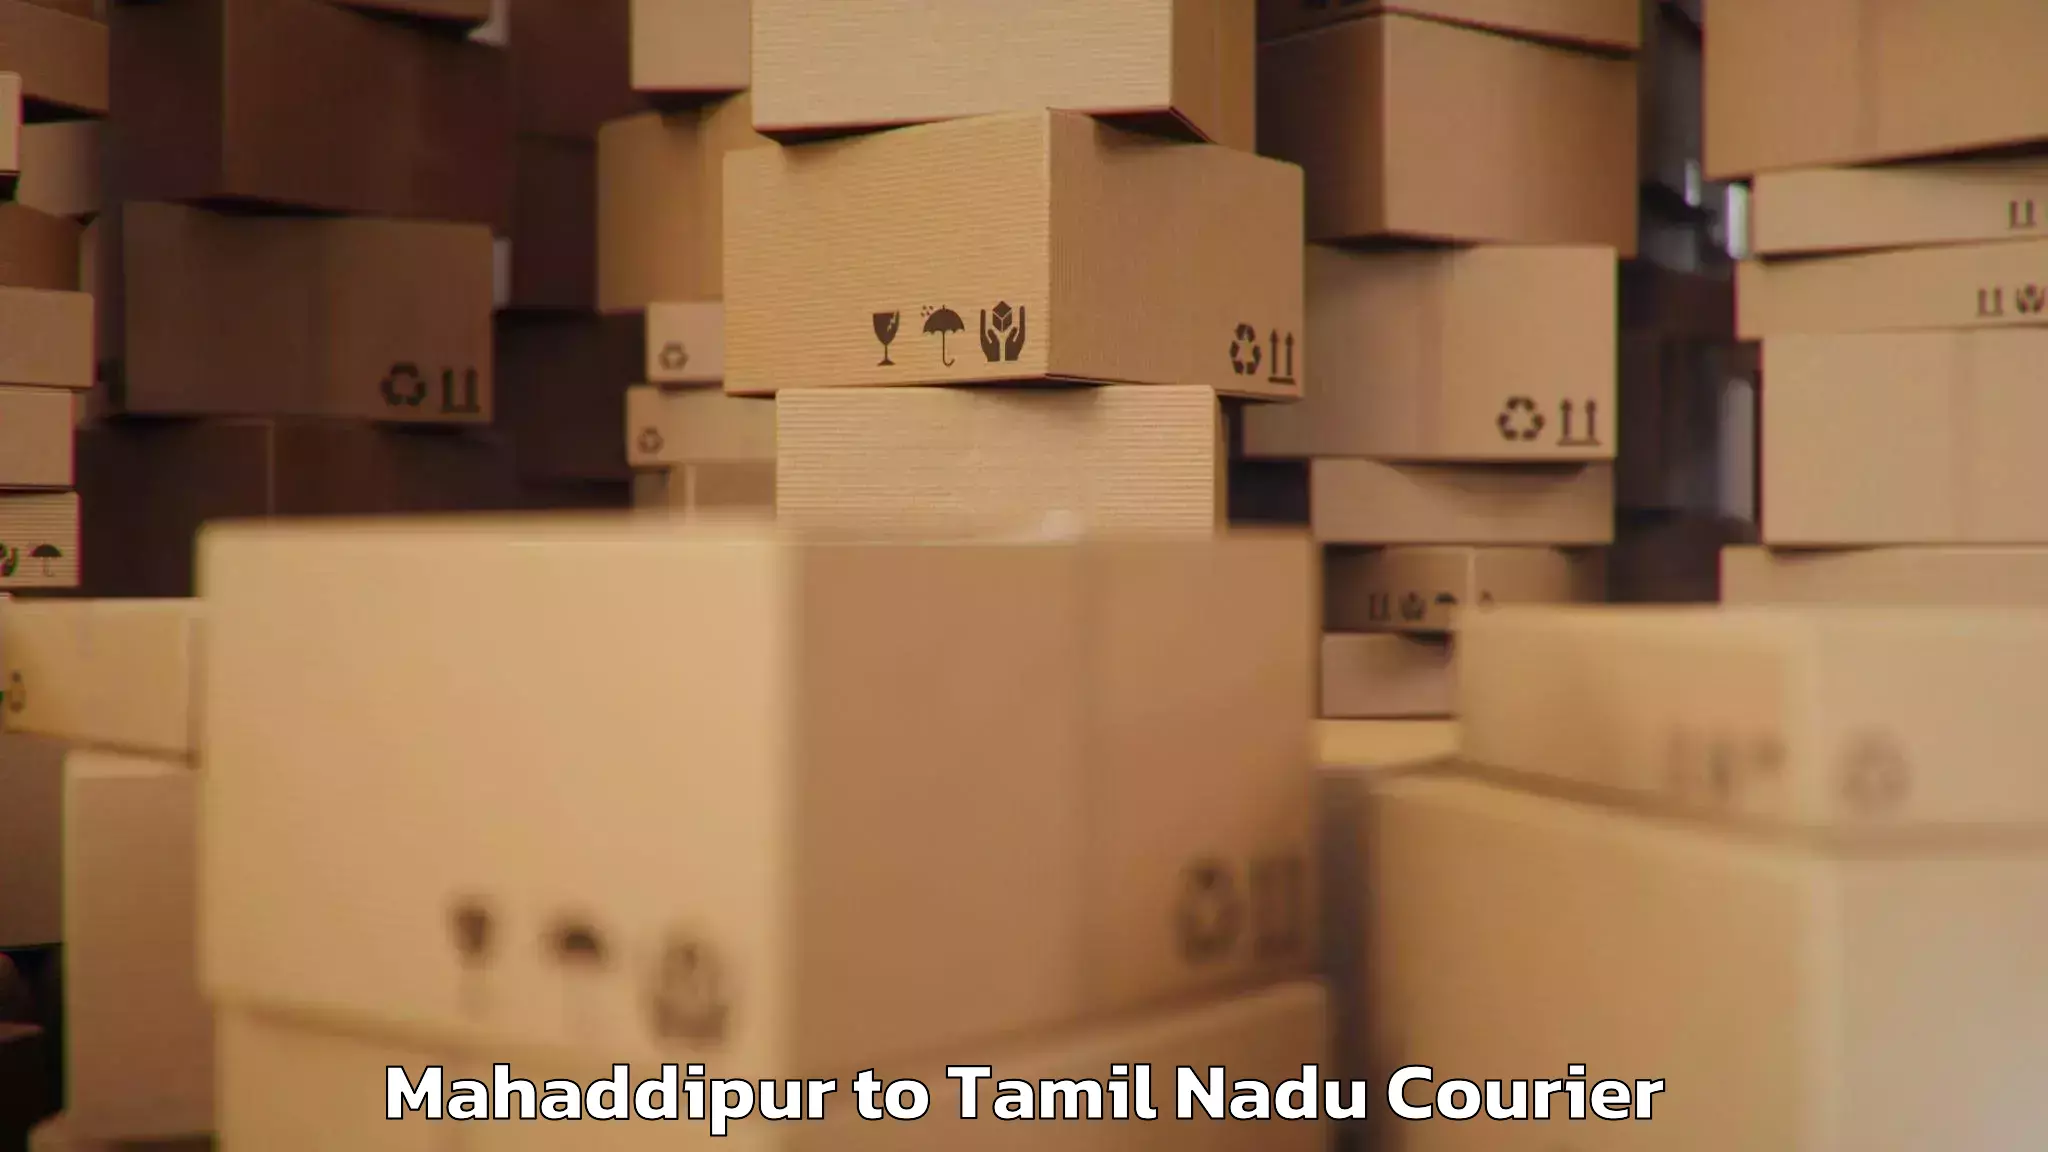 Luggage transport consulting Mahaddipur to Villupuram